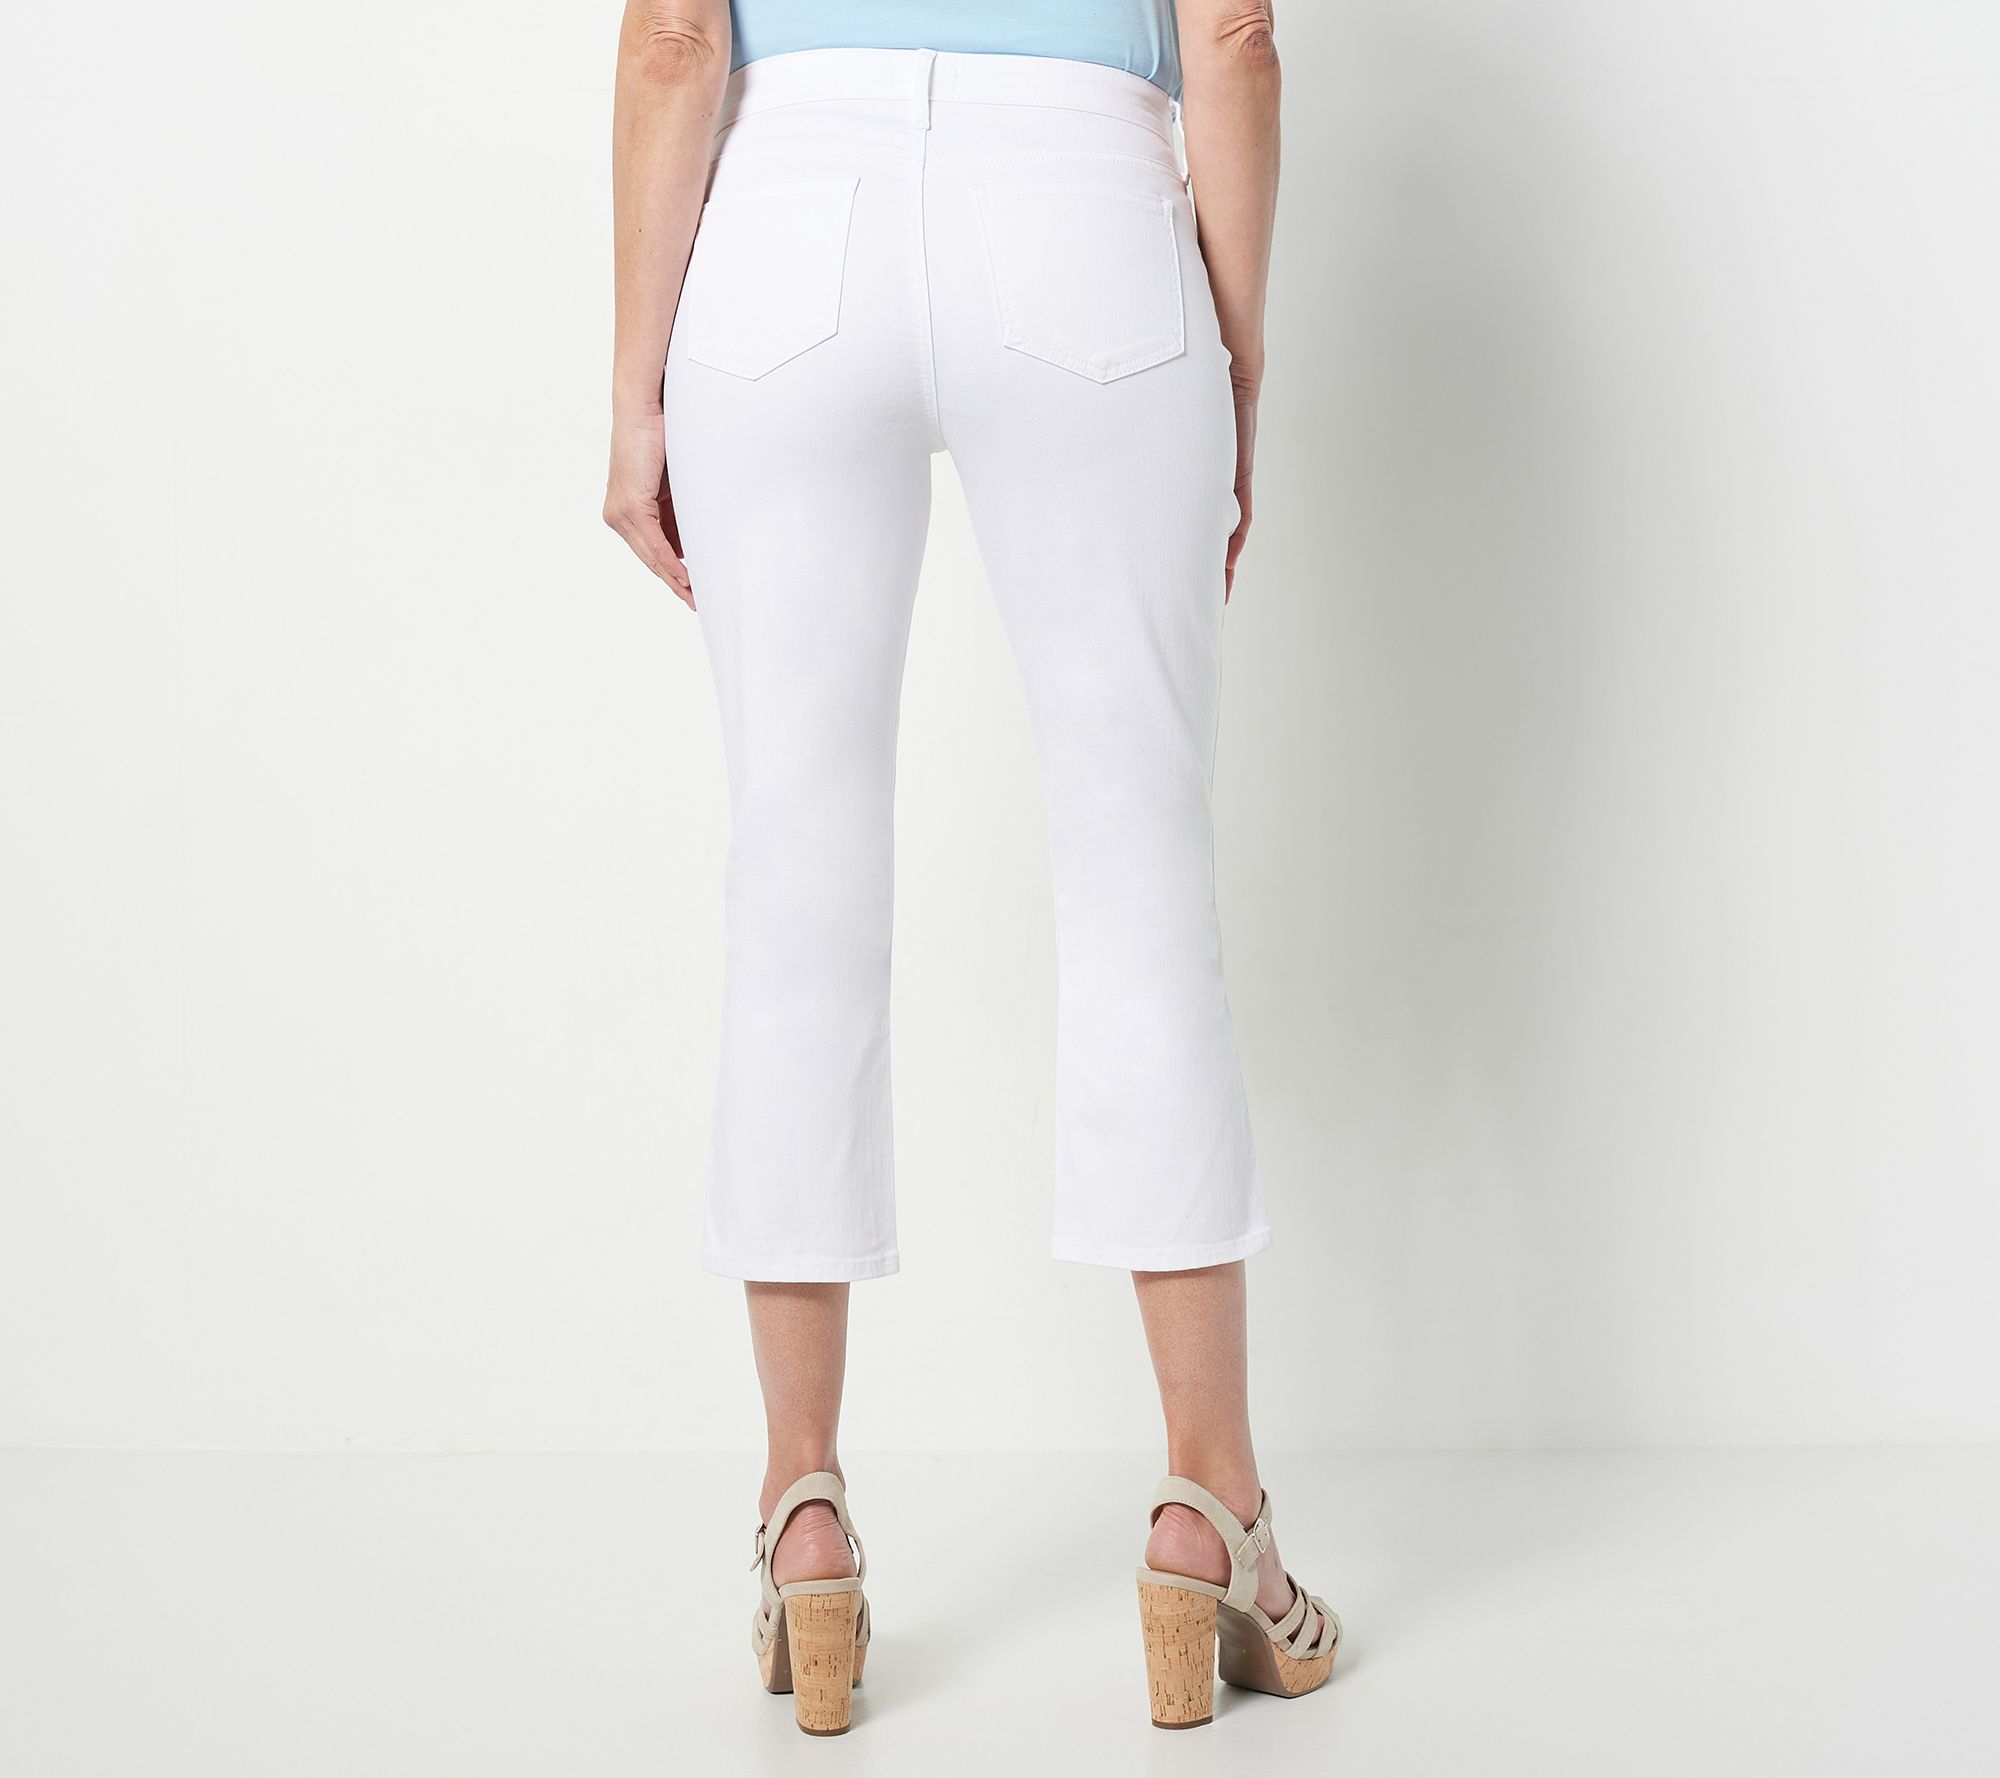 NYDJ Chloe Crop Jeans with Double Needle Slits- Optic White - QVC.com